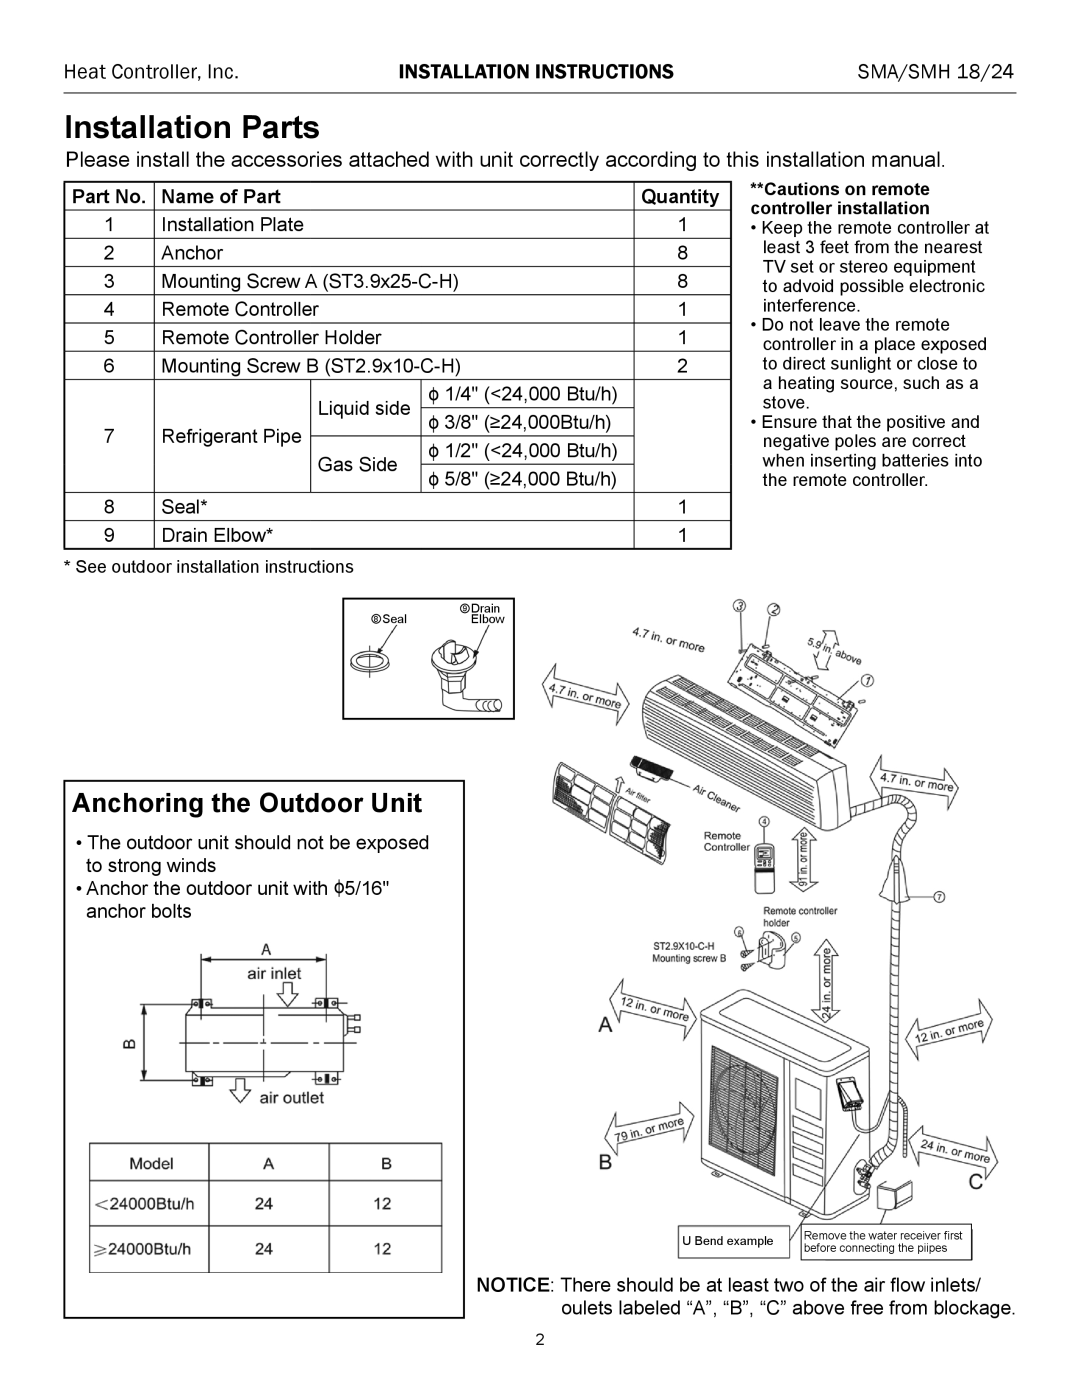 Heat Controller SMA/SMH 18/24 Installation Parts, Heat Controller, Inc, Installation Instructions, Name of Part, Quantity 